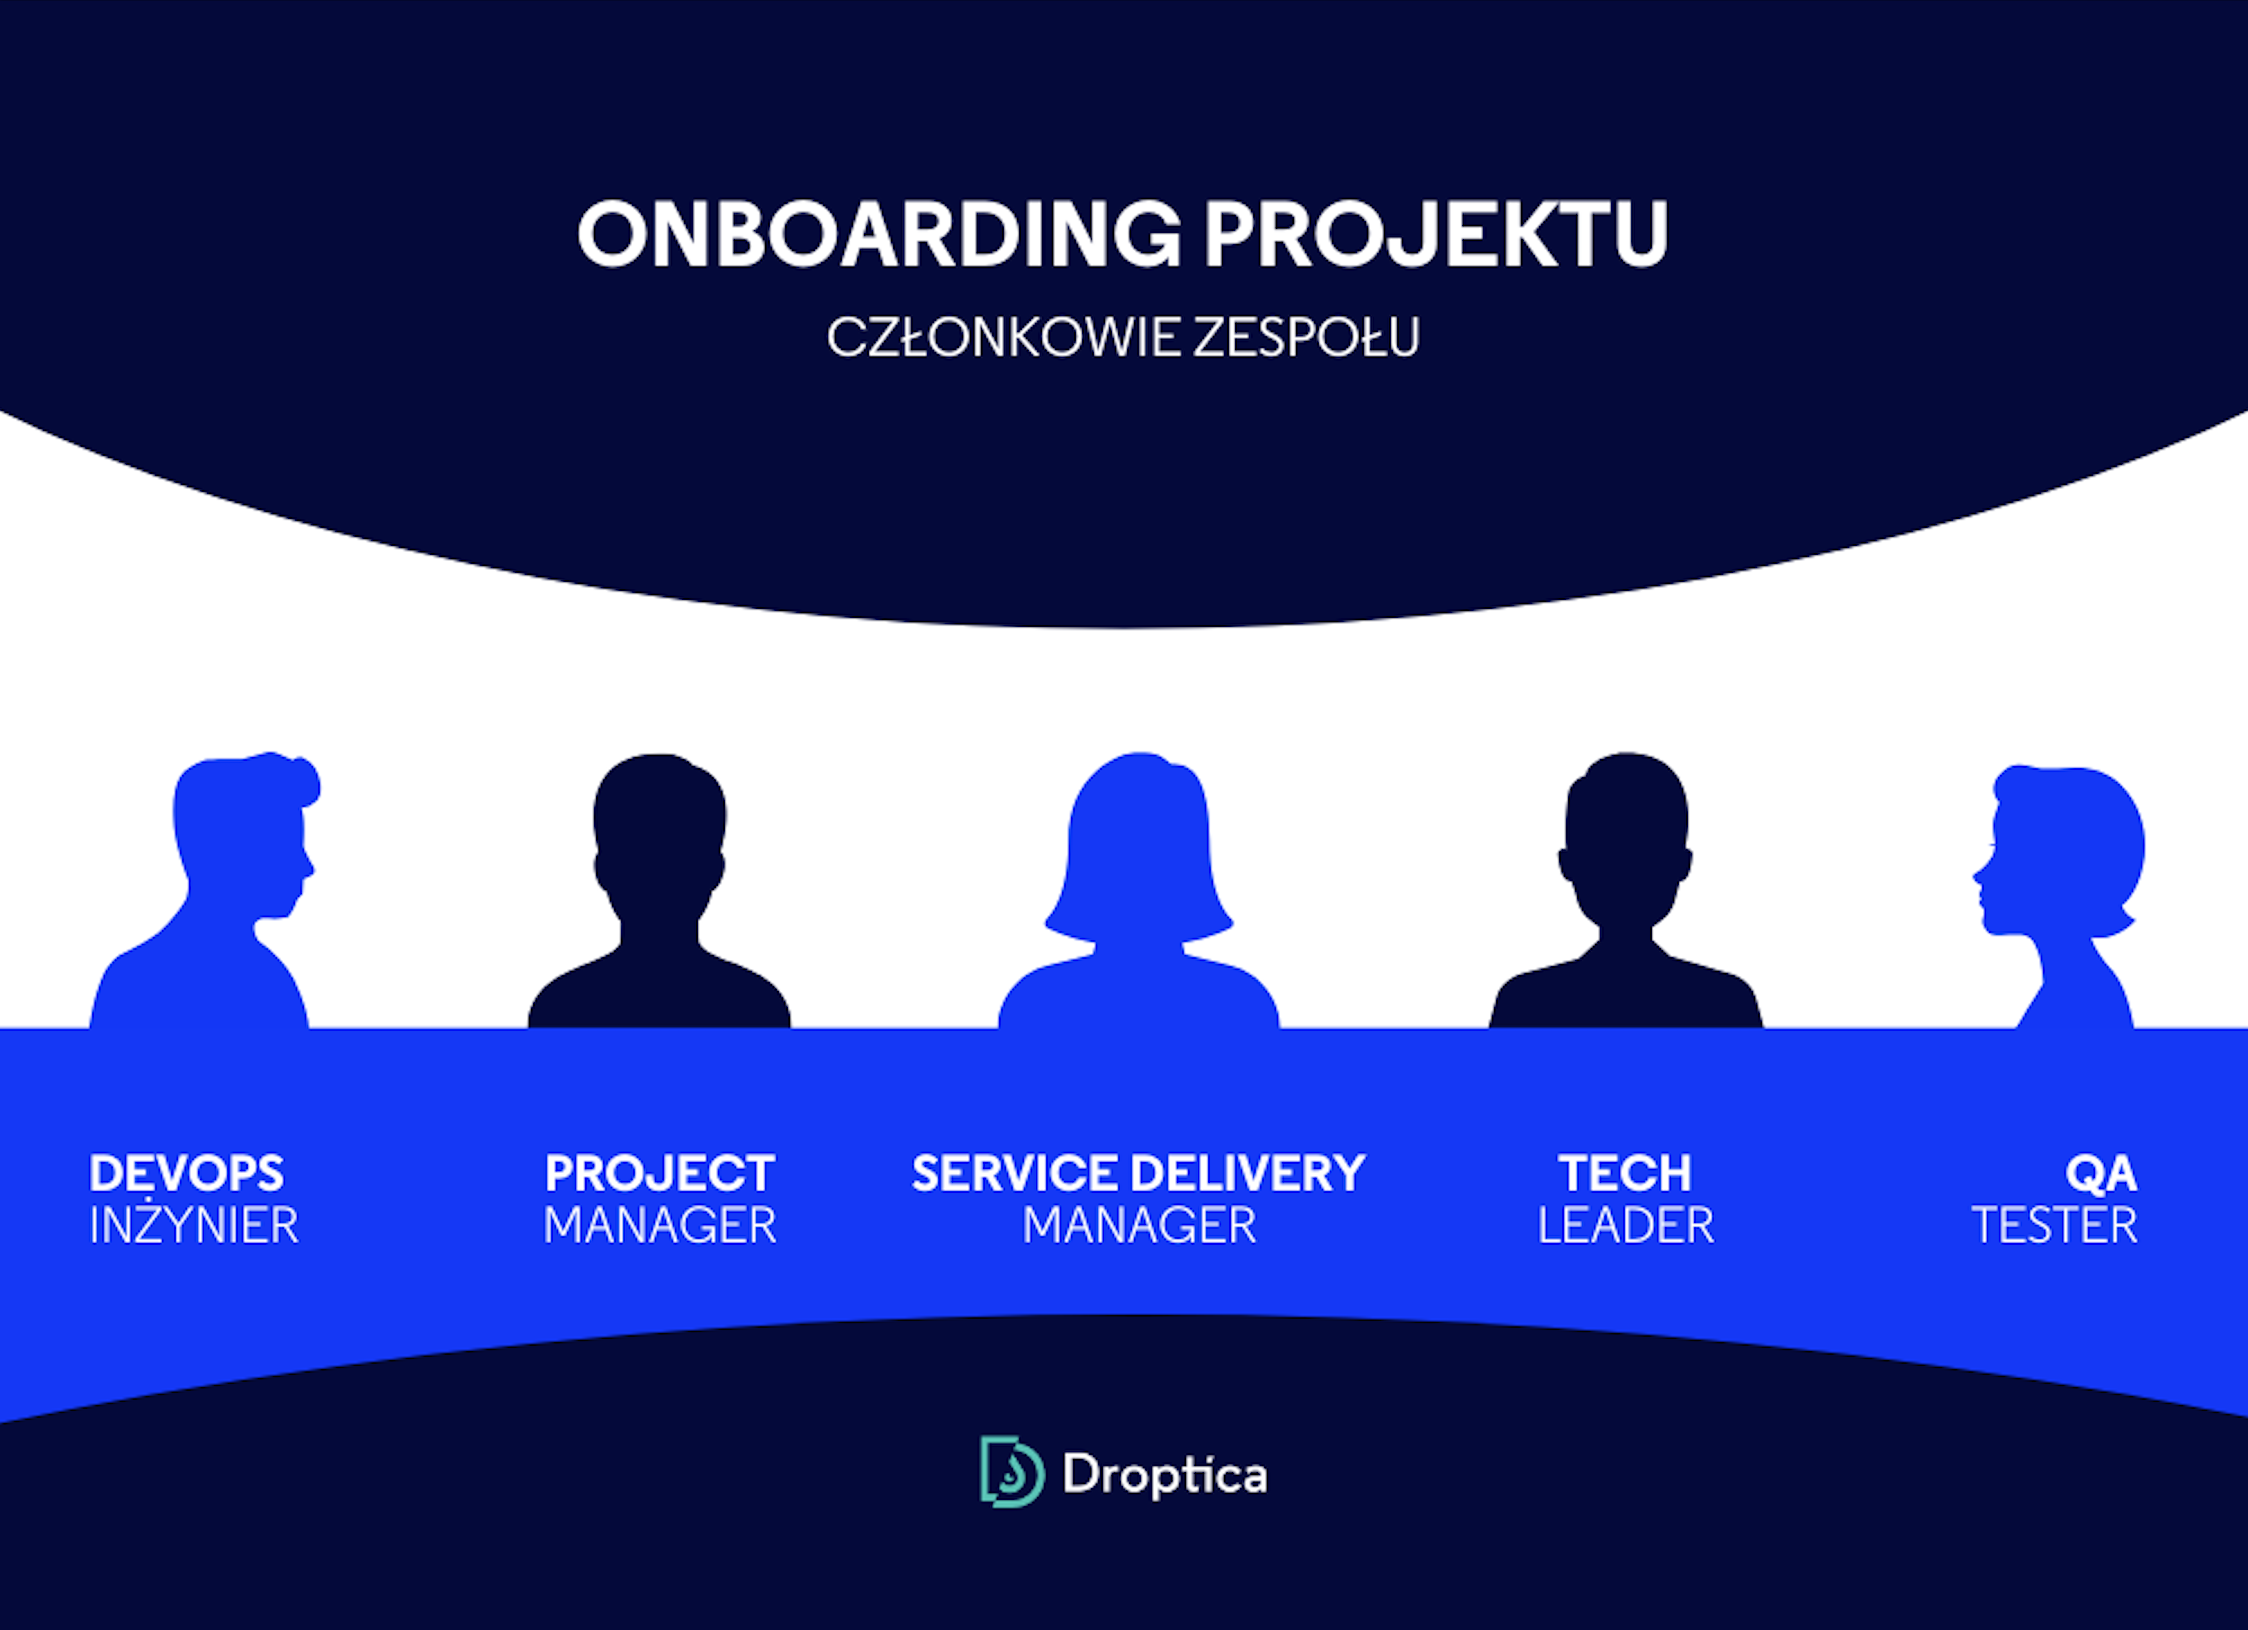 Zespół onboardingu projektu tworzą service delivery manager, pm, DevOps, tech leader i QA tester. 